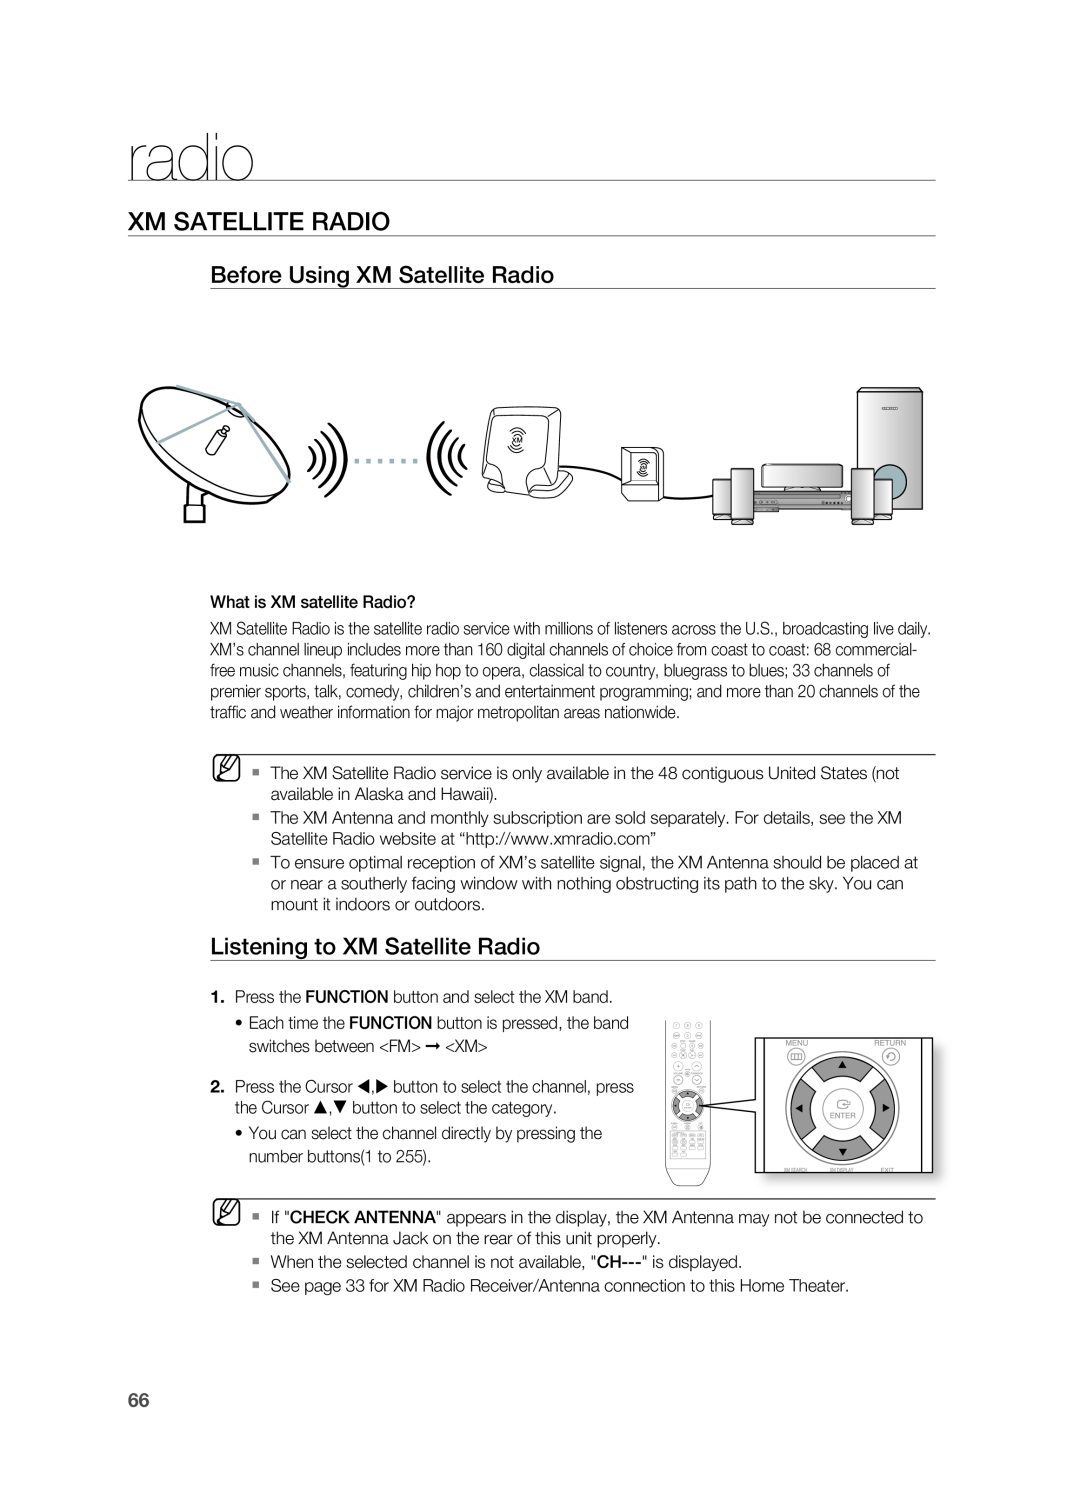 Samsung HT-Z510 manual XM SATELLITE rADIO, Before Using XM Satellite radio, Listening to XM Satellite radio 